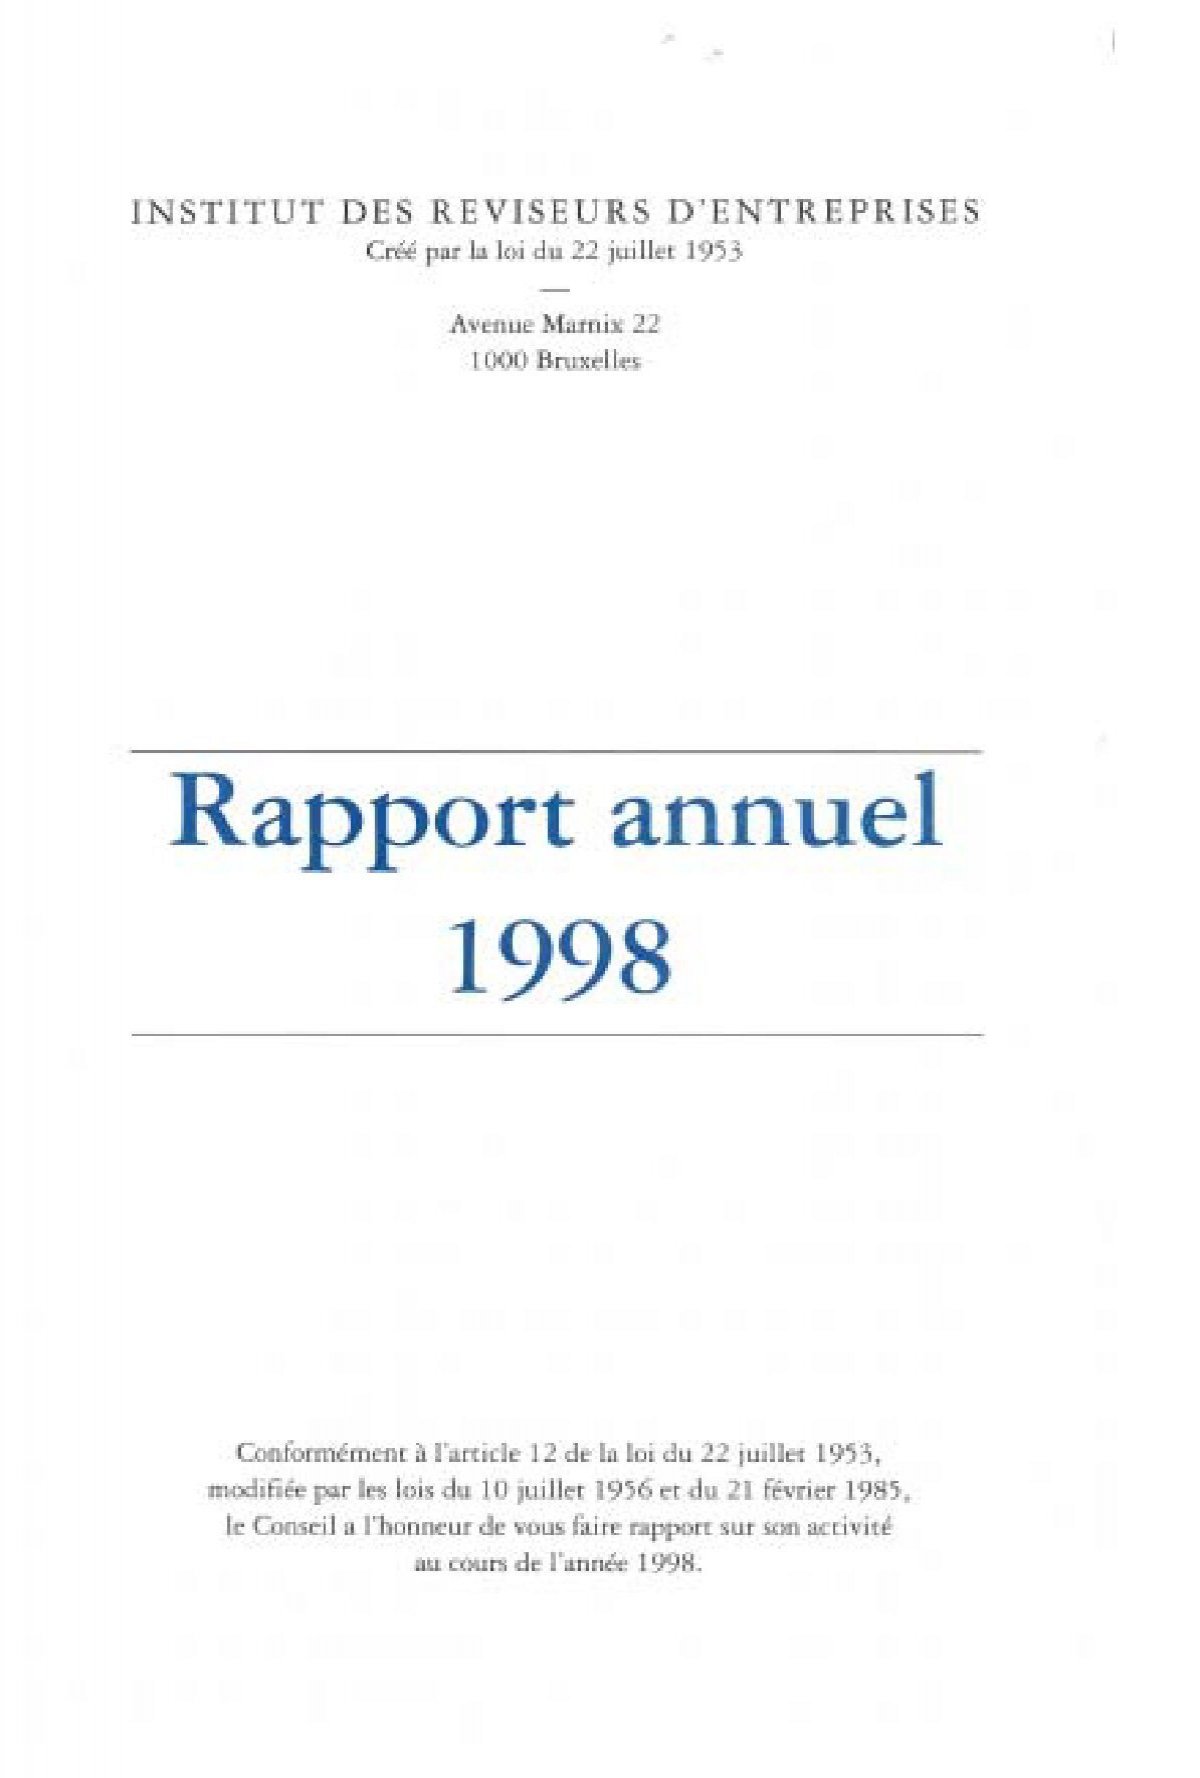 Rapport annuel 1998.pdf - IBR